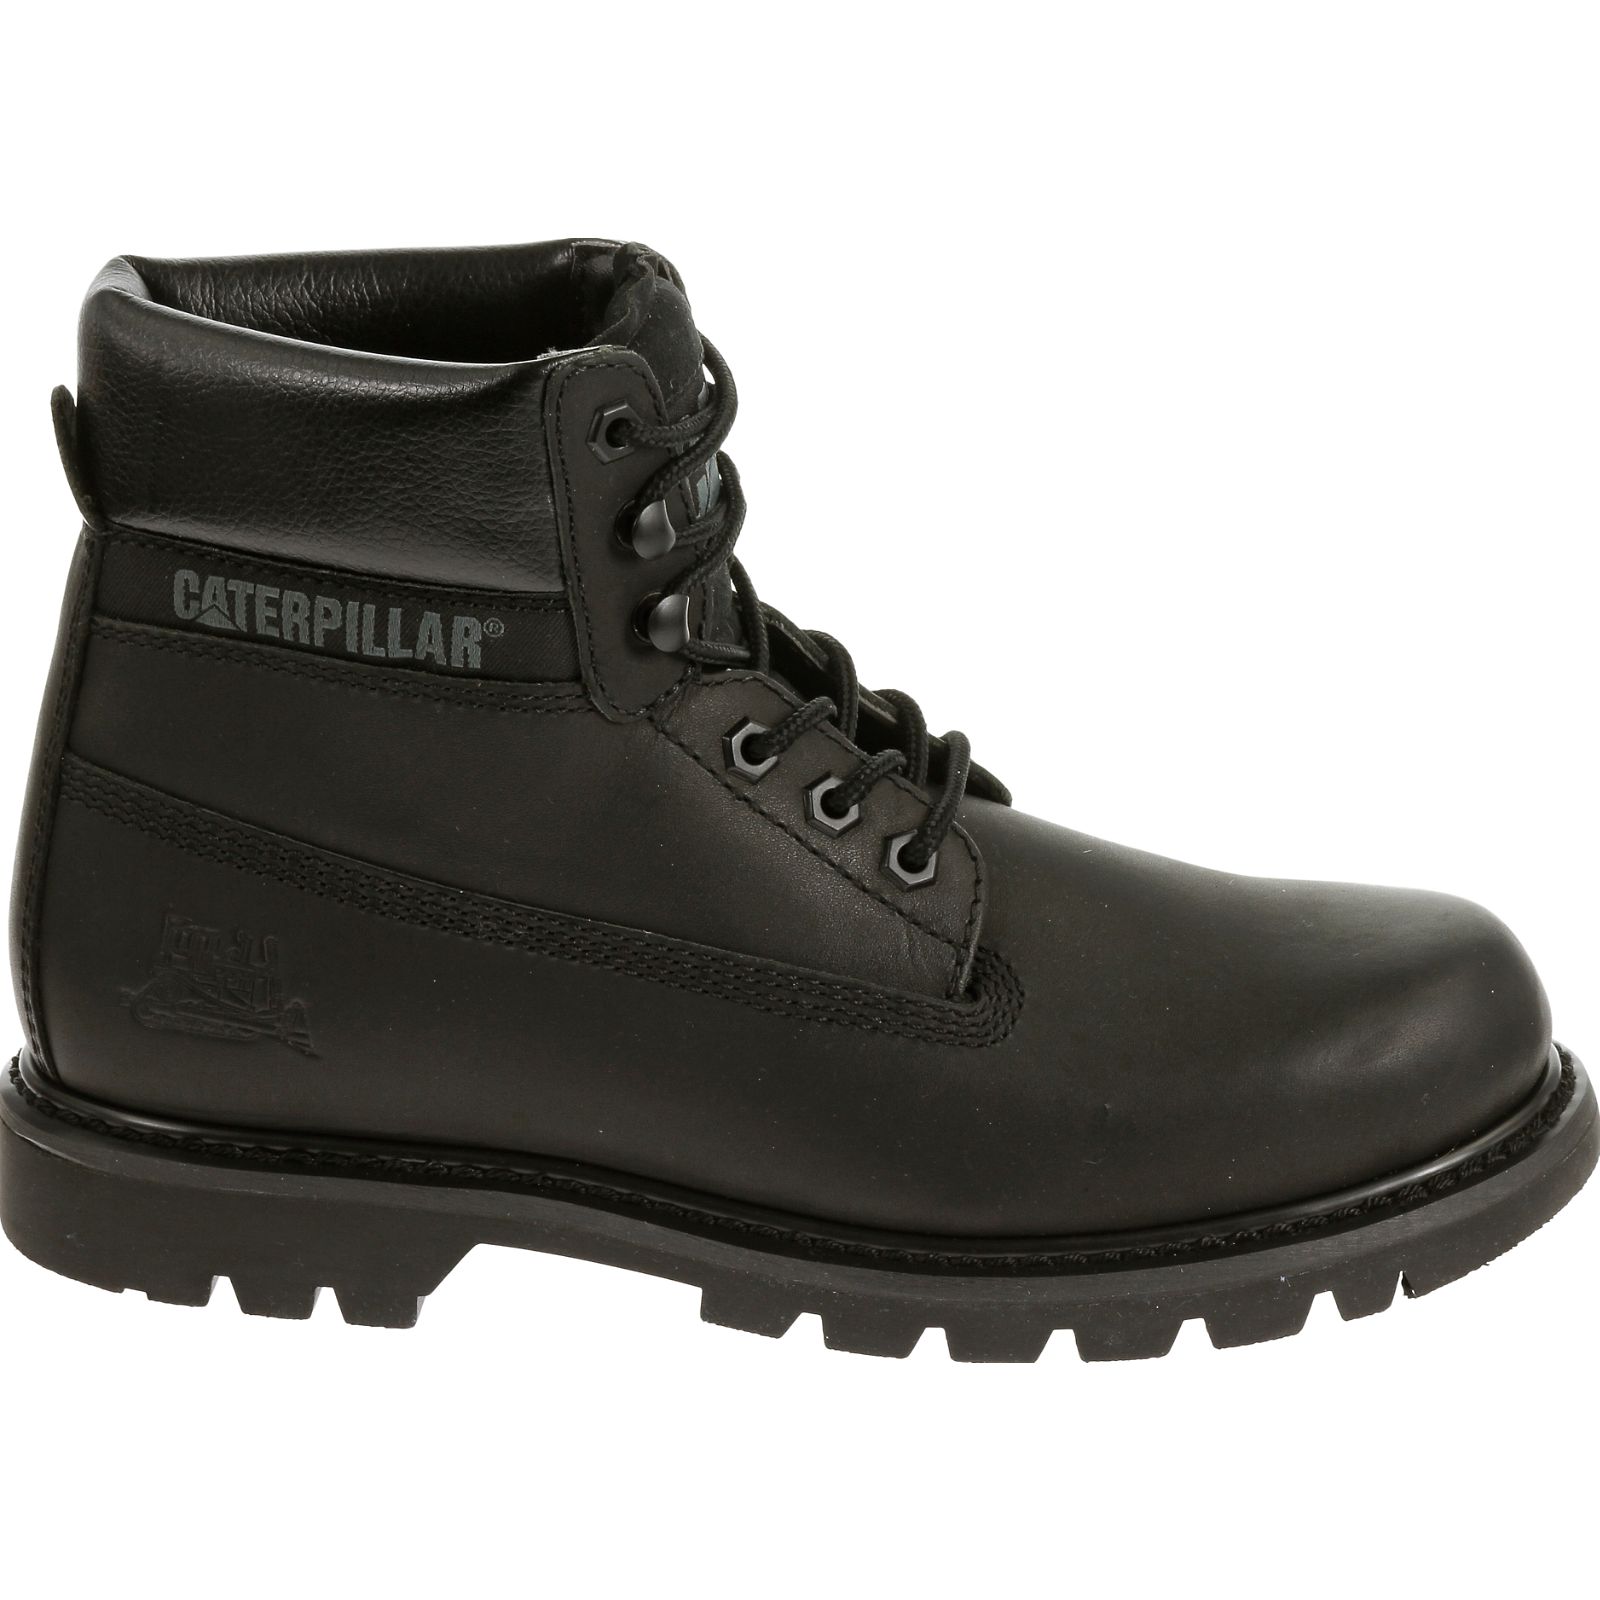 Caterpillar Boots Sale - Caterpillar Colorado Mens Casual Boots Black (849260-GDJ)